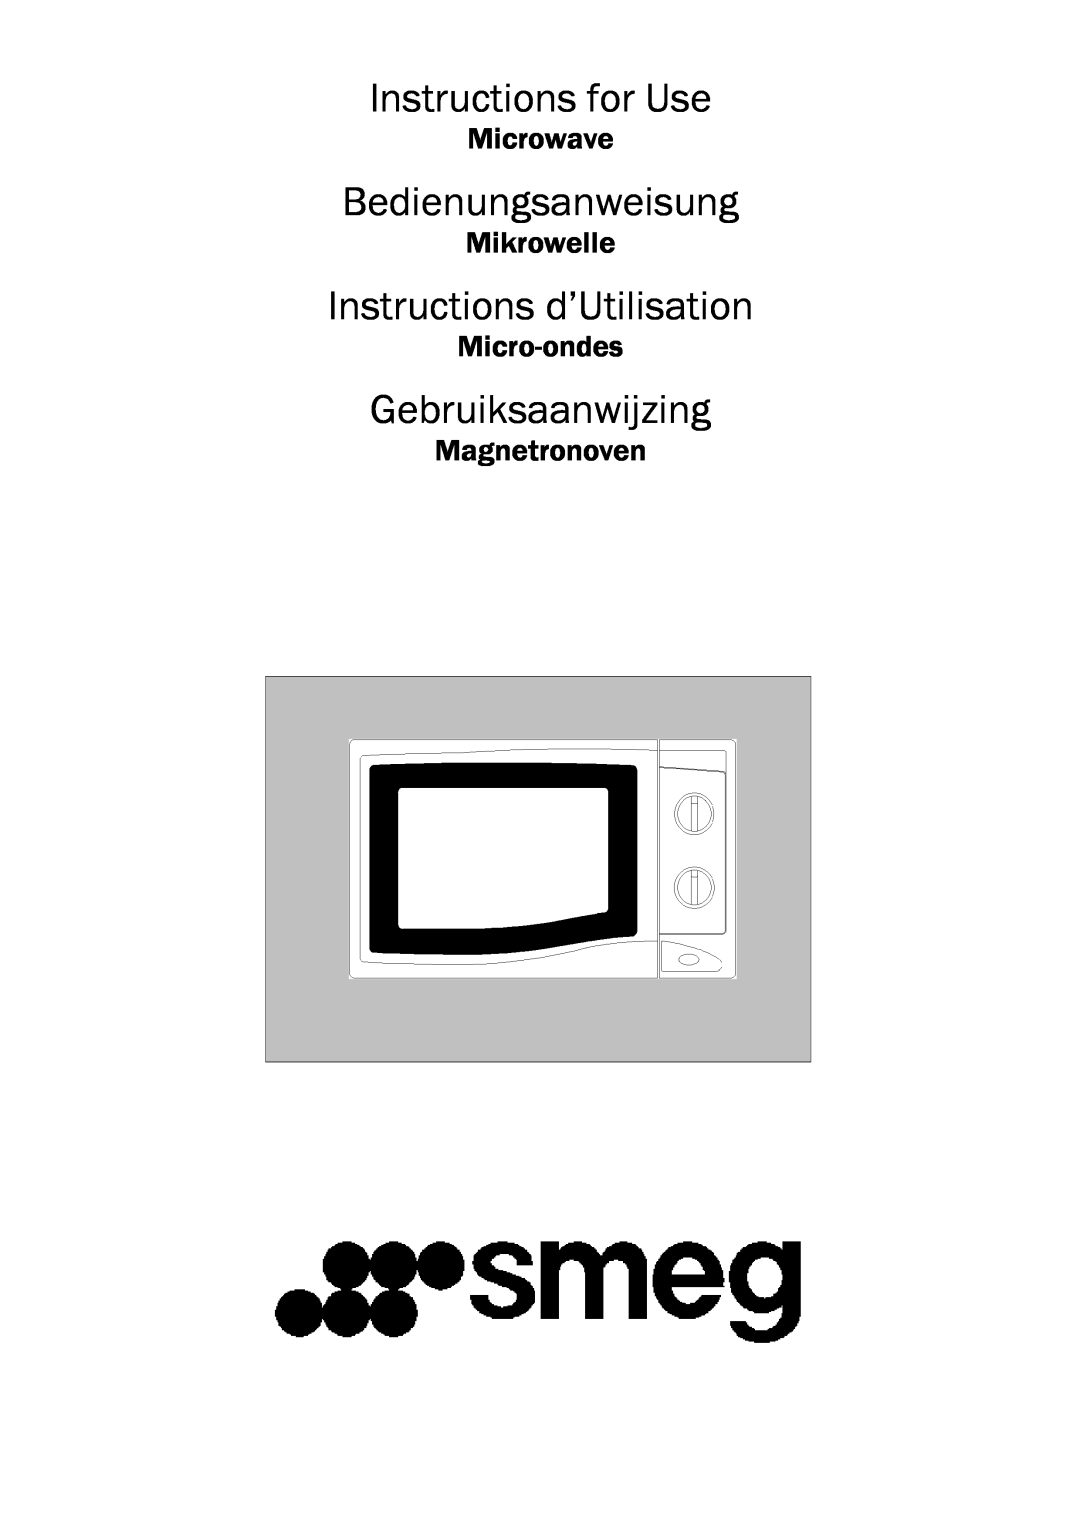 Smeg MM182XS manual Instructions for Use, Bedienungsanweisung, Instructions d’Utilisation, Gebruiksaanwijzing, Microwave 